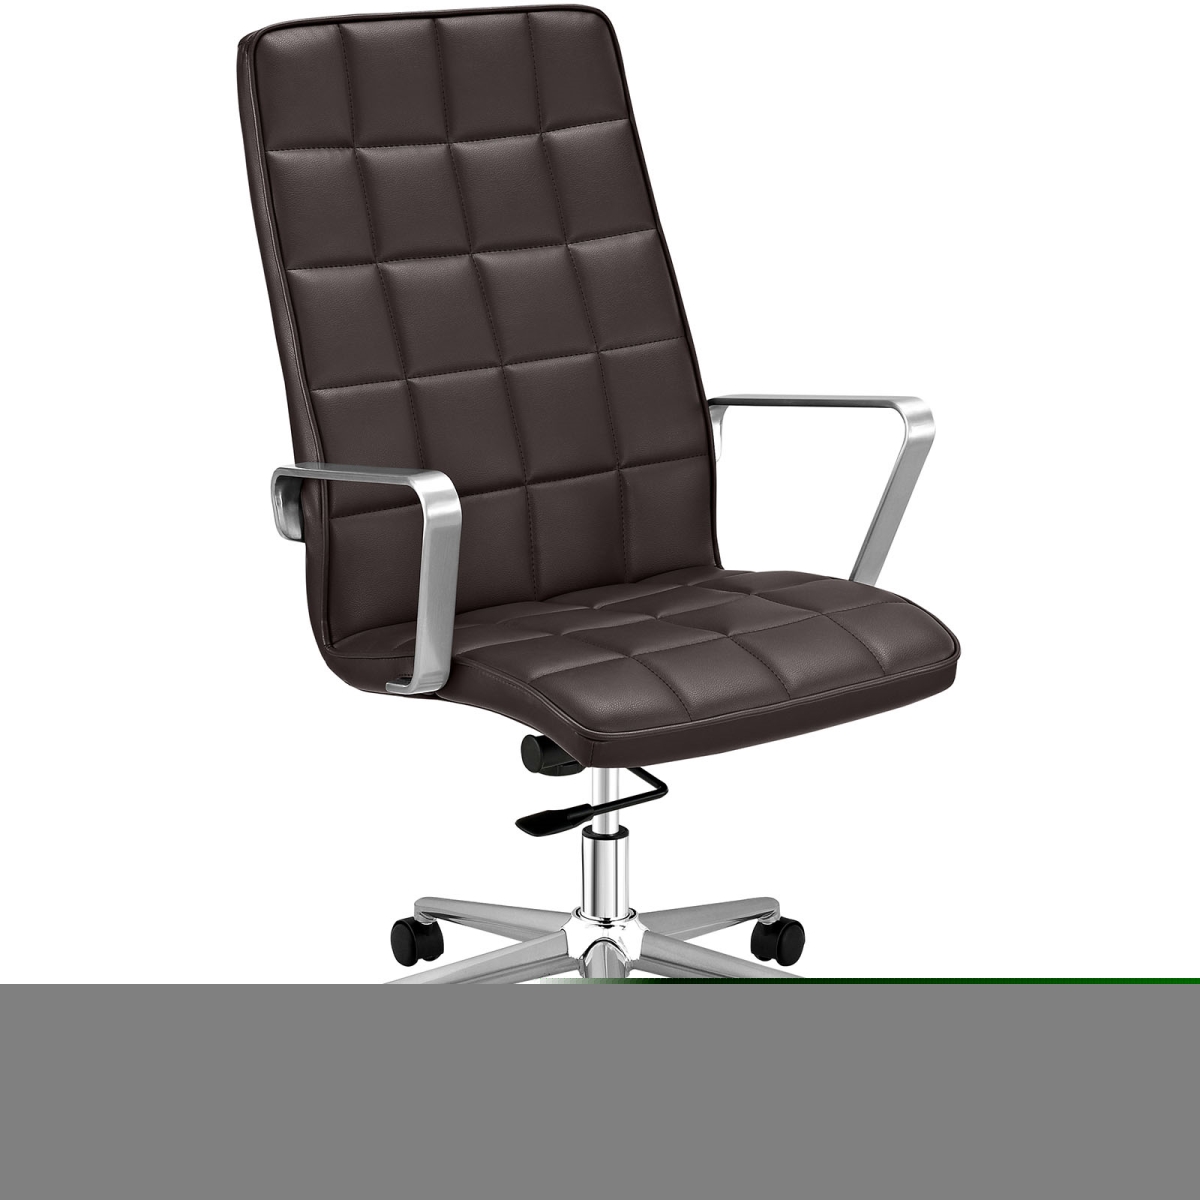 Modway Eei-2126-brn Tile Highback Office Chair, Brown